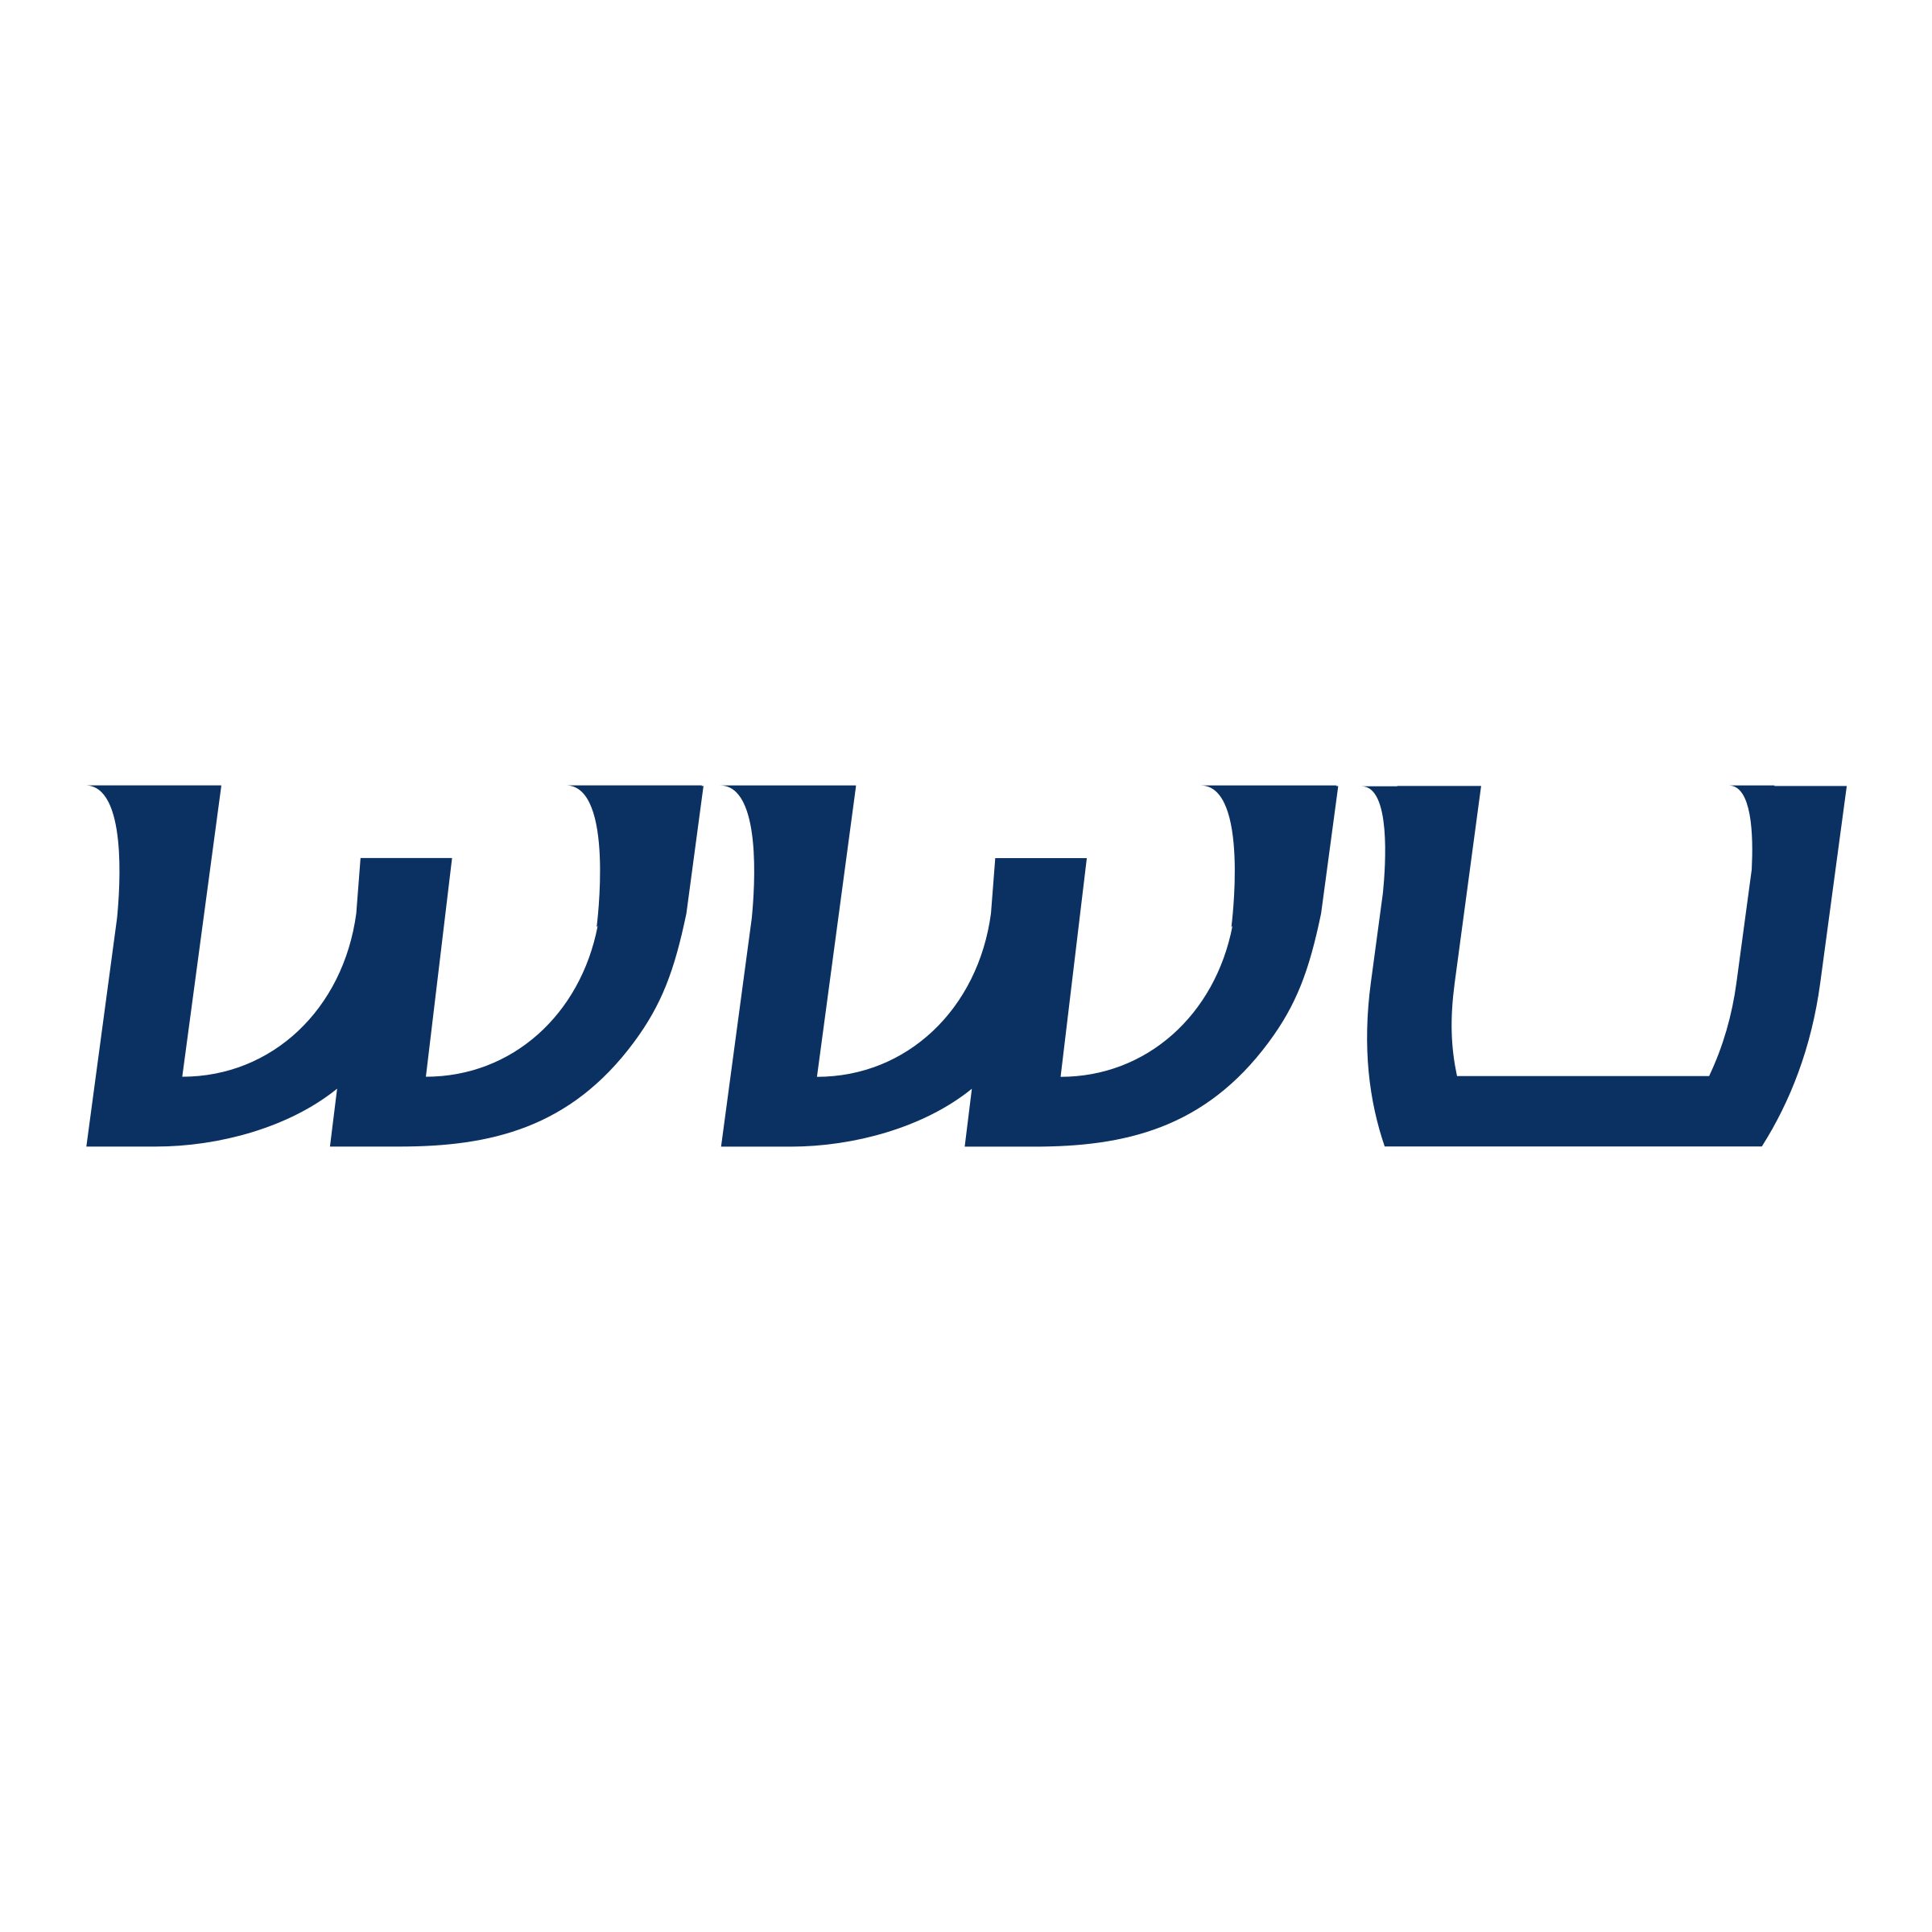 WWU Logo - WWU Vikings Logo PNG Transparent & SVG Vector - Freebie Supply